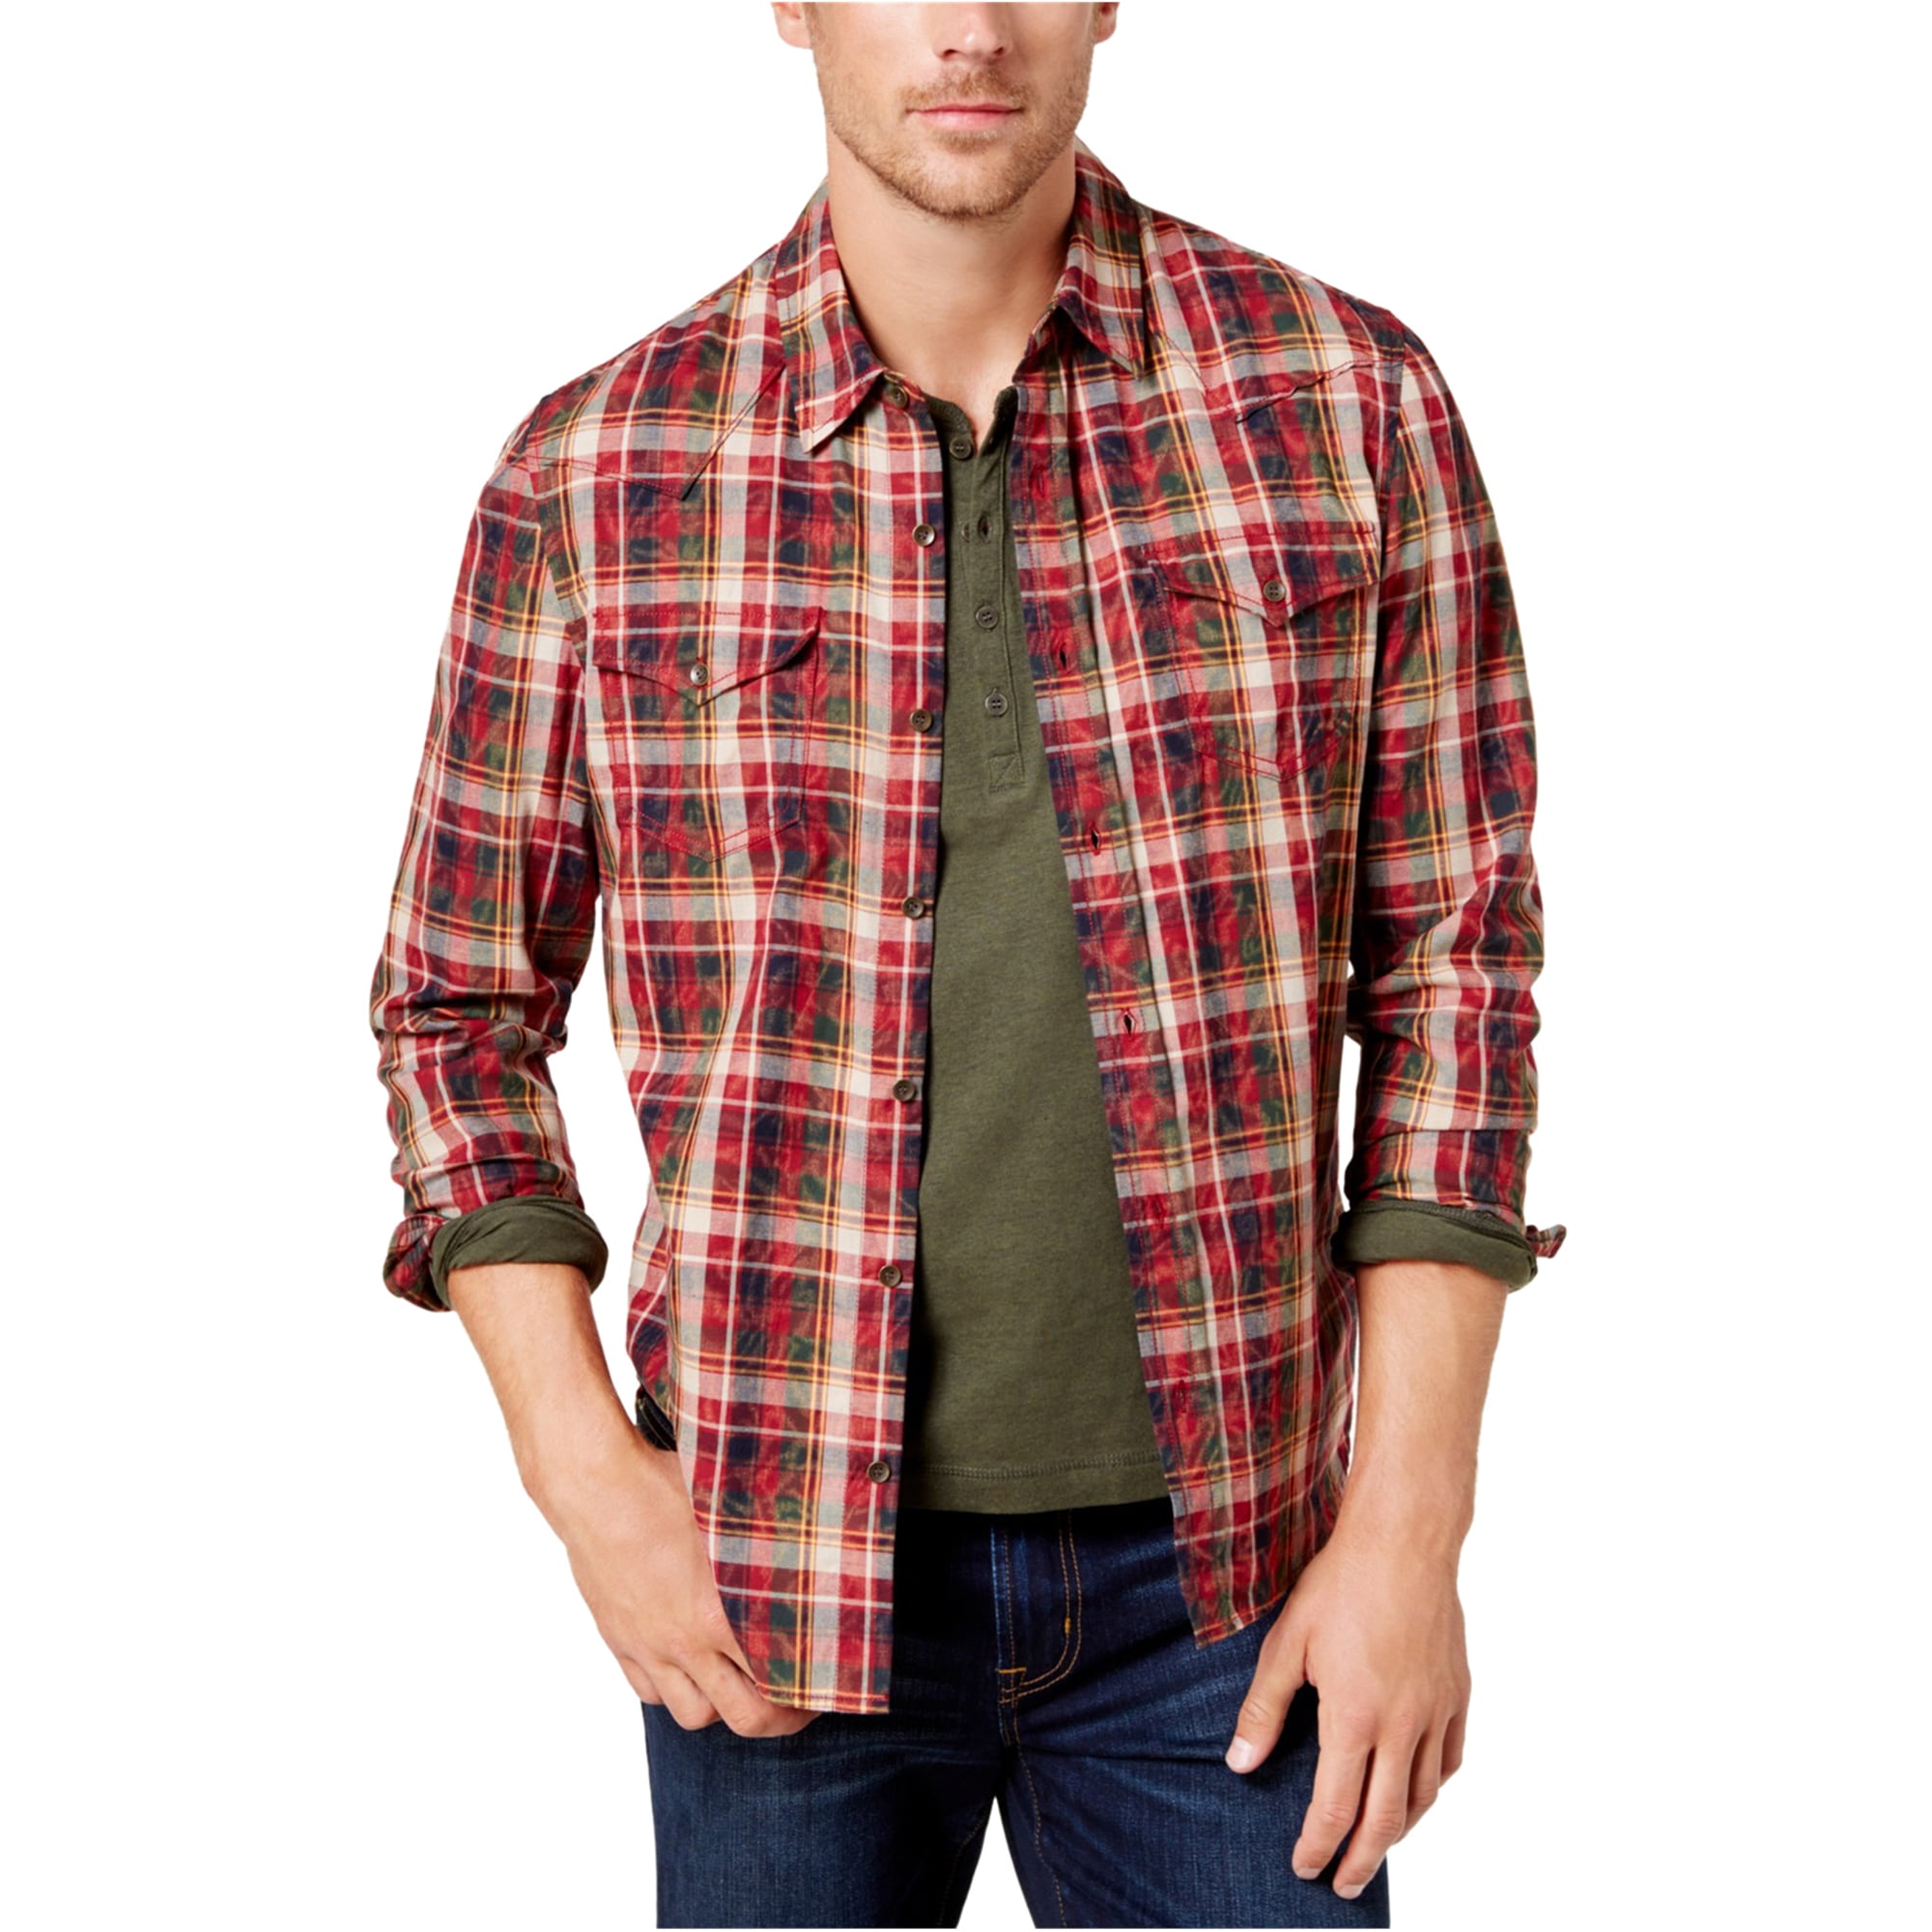 Blake Shelton - Blake Shelton Mens Woven Button Up Shirt - Walmart.com ...